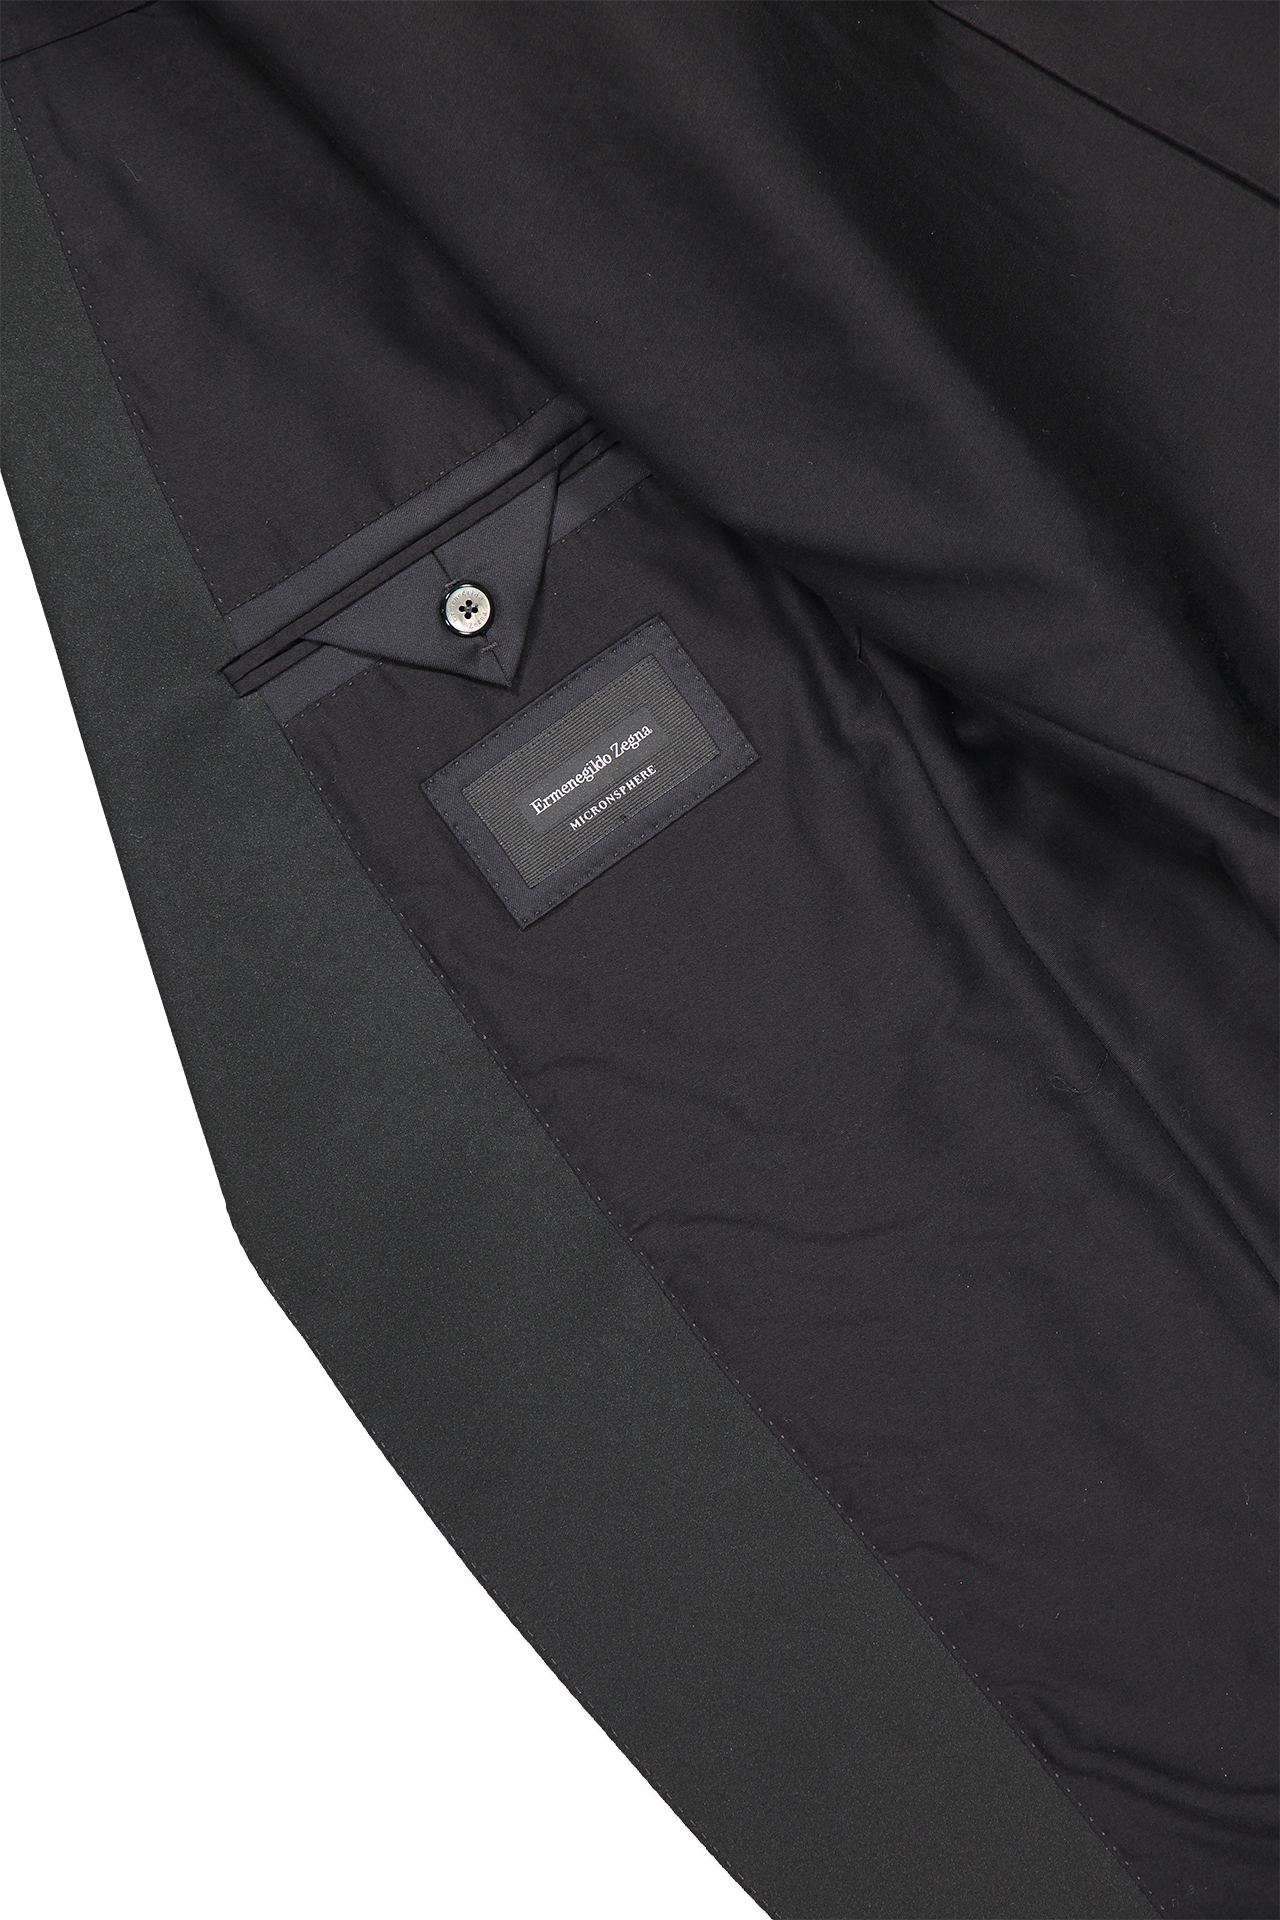 Zegna Micronsphere Tuxedo Black Inside Detail Image (4371186450547)